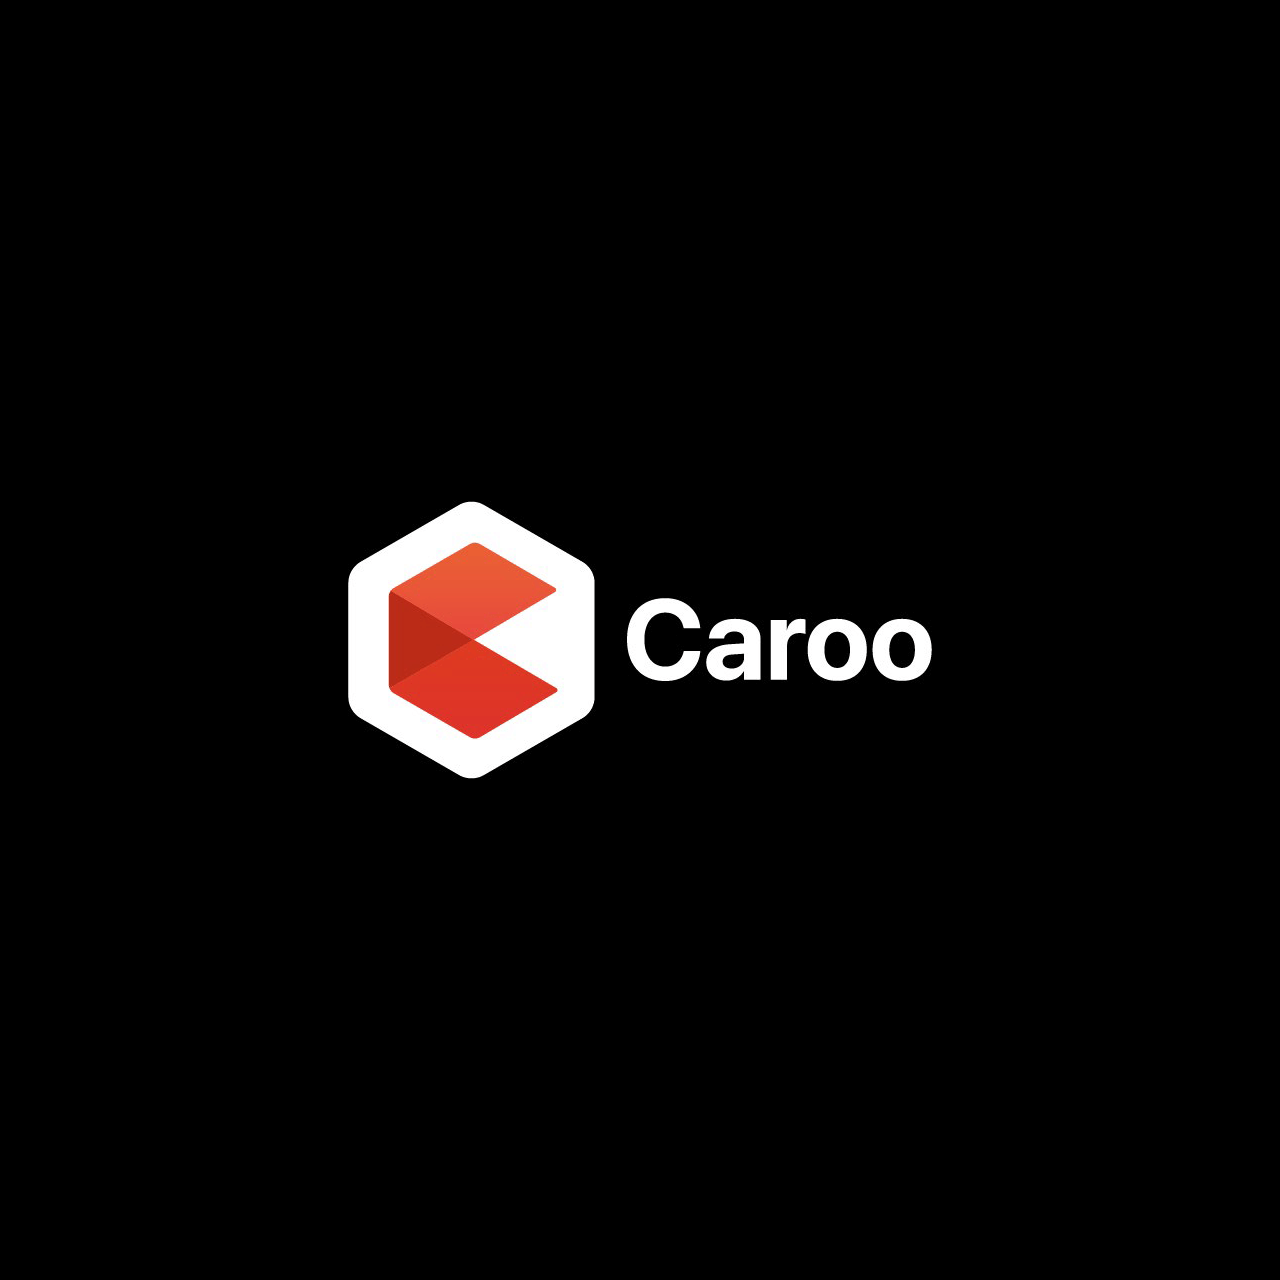 Caroo